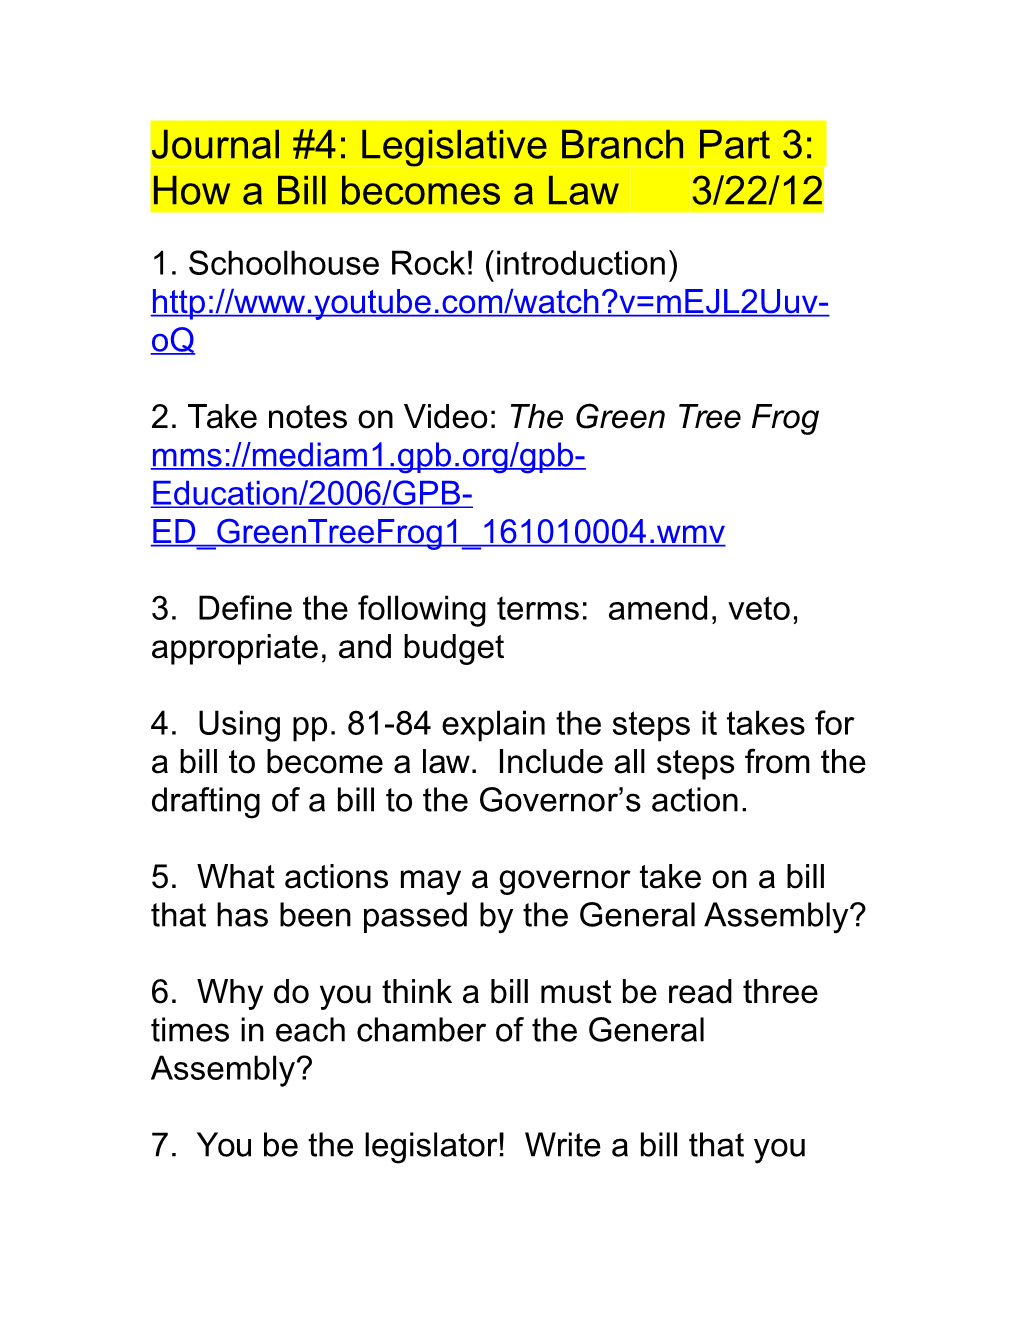 Journal #4: Legislative Branch Part 3: How a Bill Becomes a Law